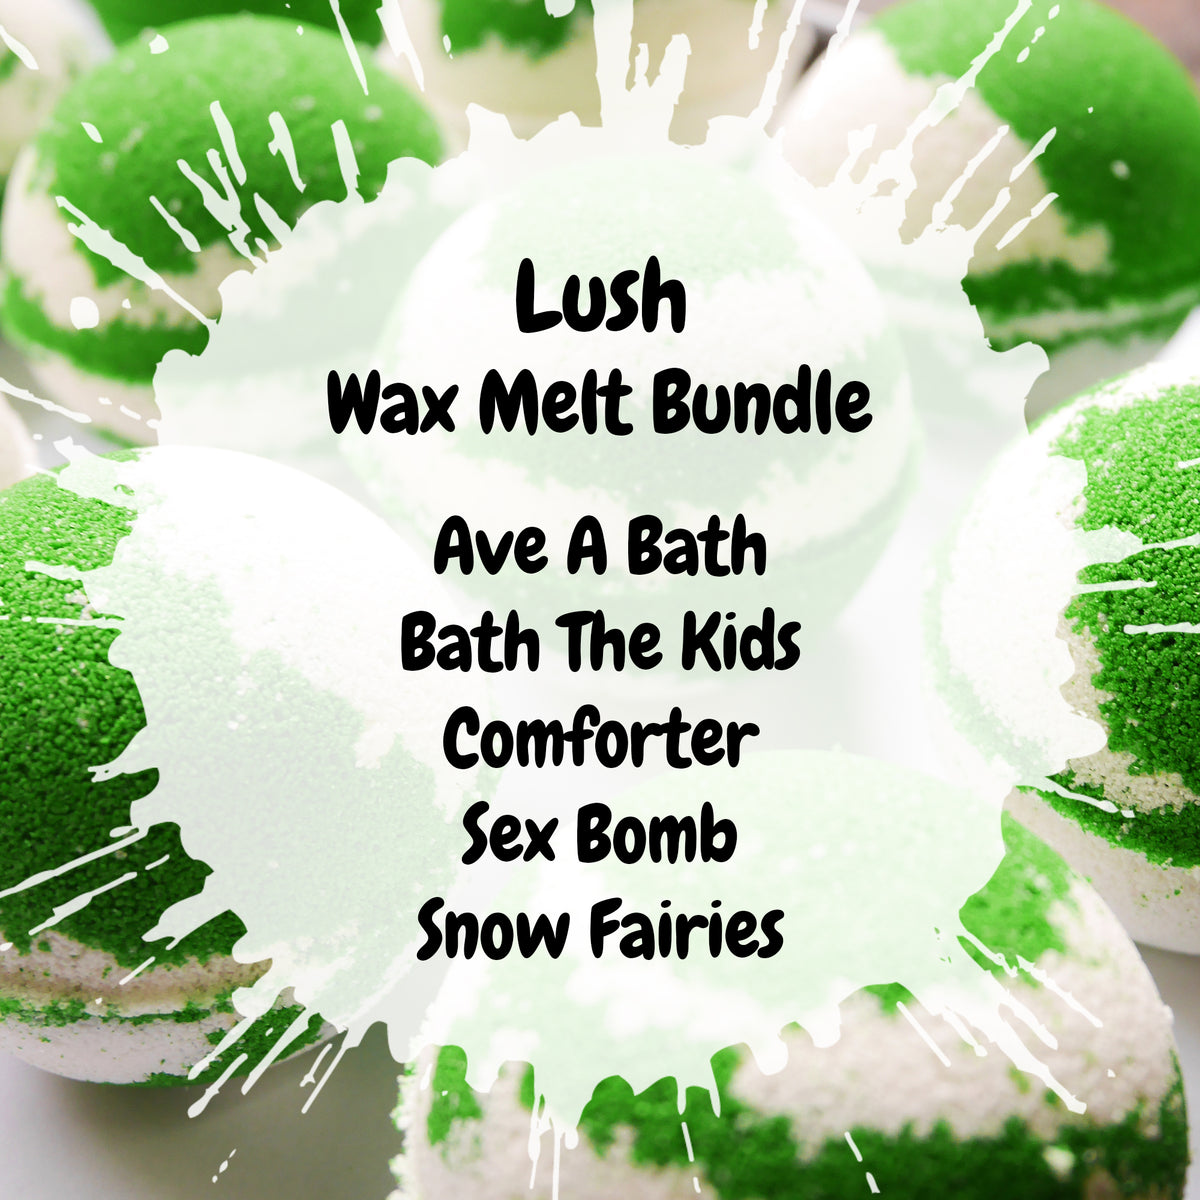 Lush Wax Melt Bundle